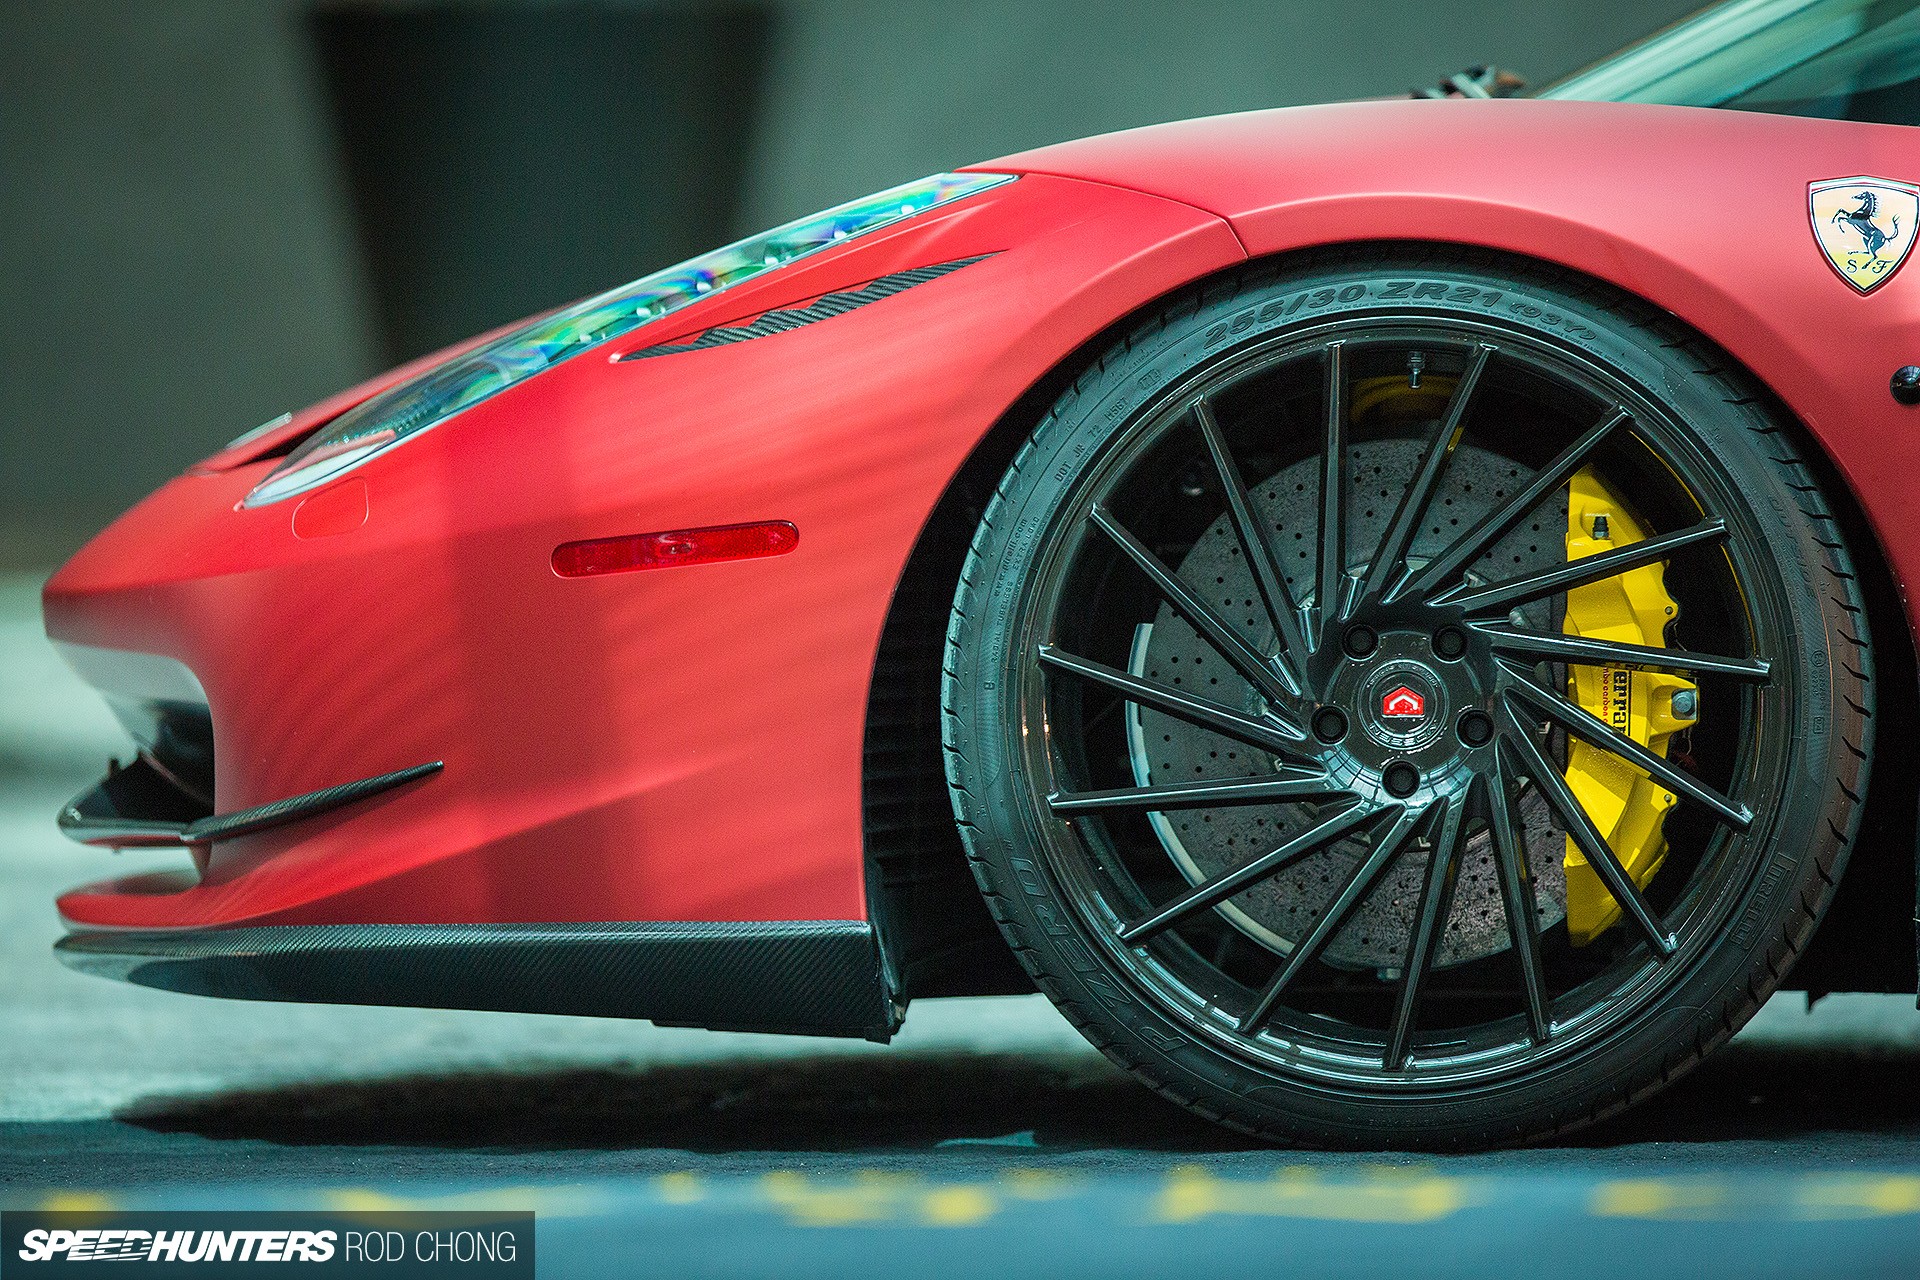 General 1920x1280 Ferrari car red cars Speedhunters vehicle wheels tires supercars italian cars Stellantis